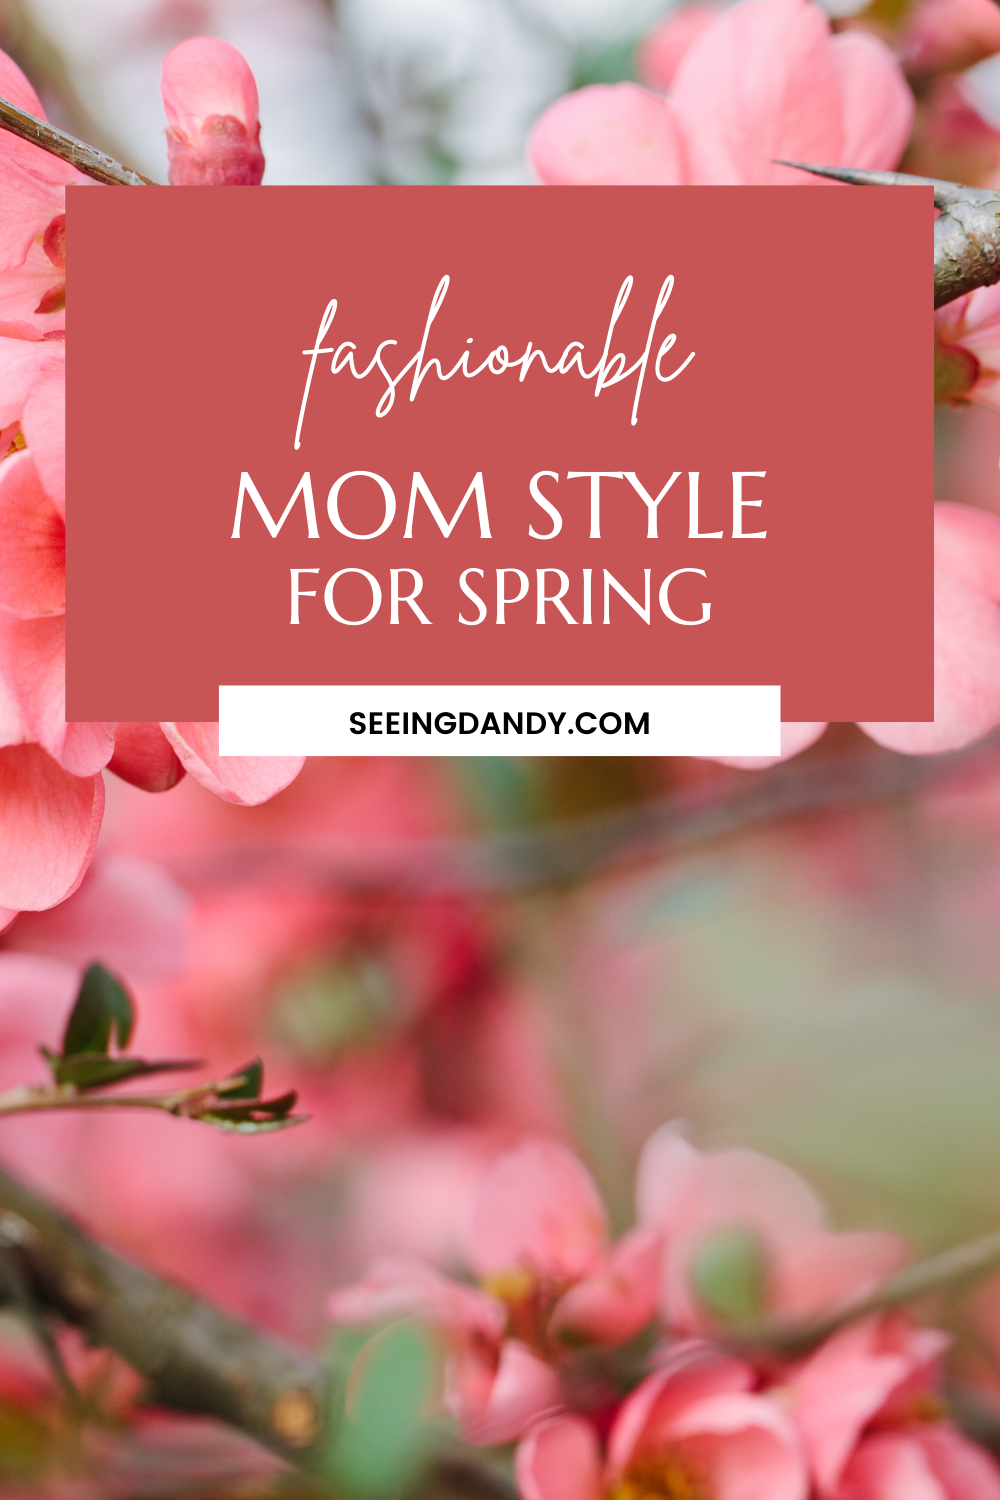 spring fashion, macys sale, macys friends and family, macys fashion, spring style, fashionable mom style, pink flowering tree